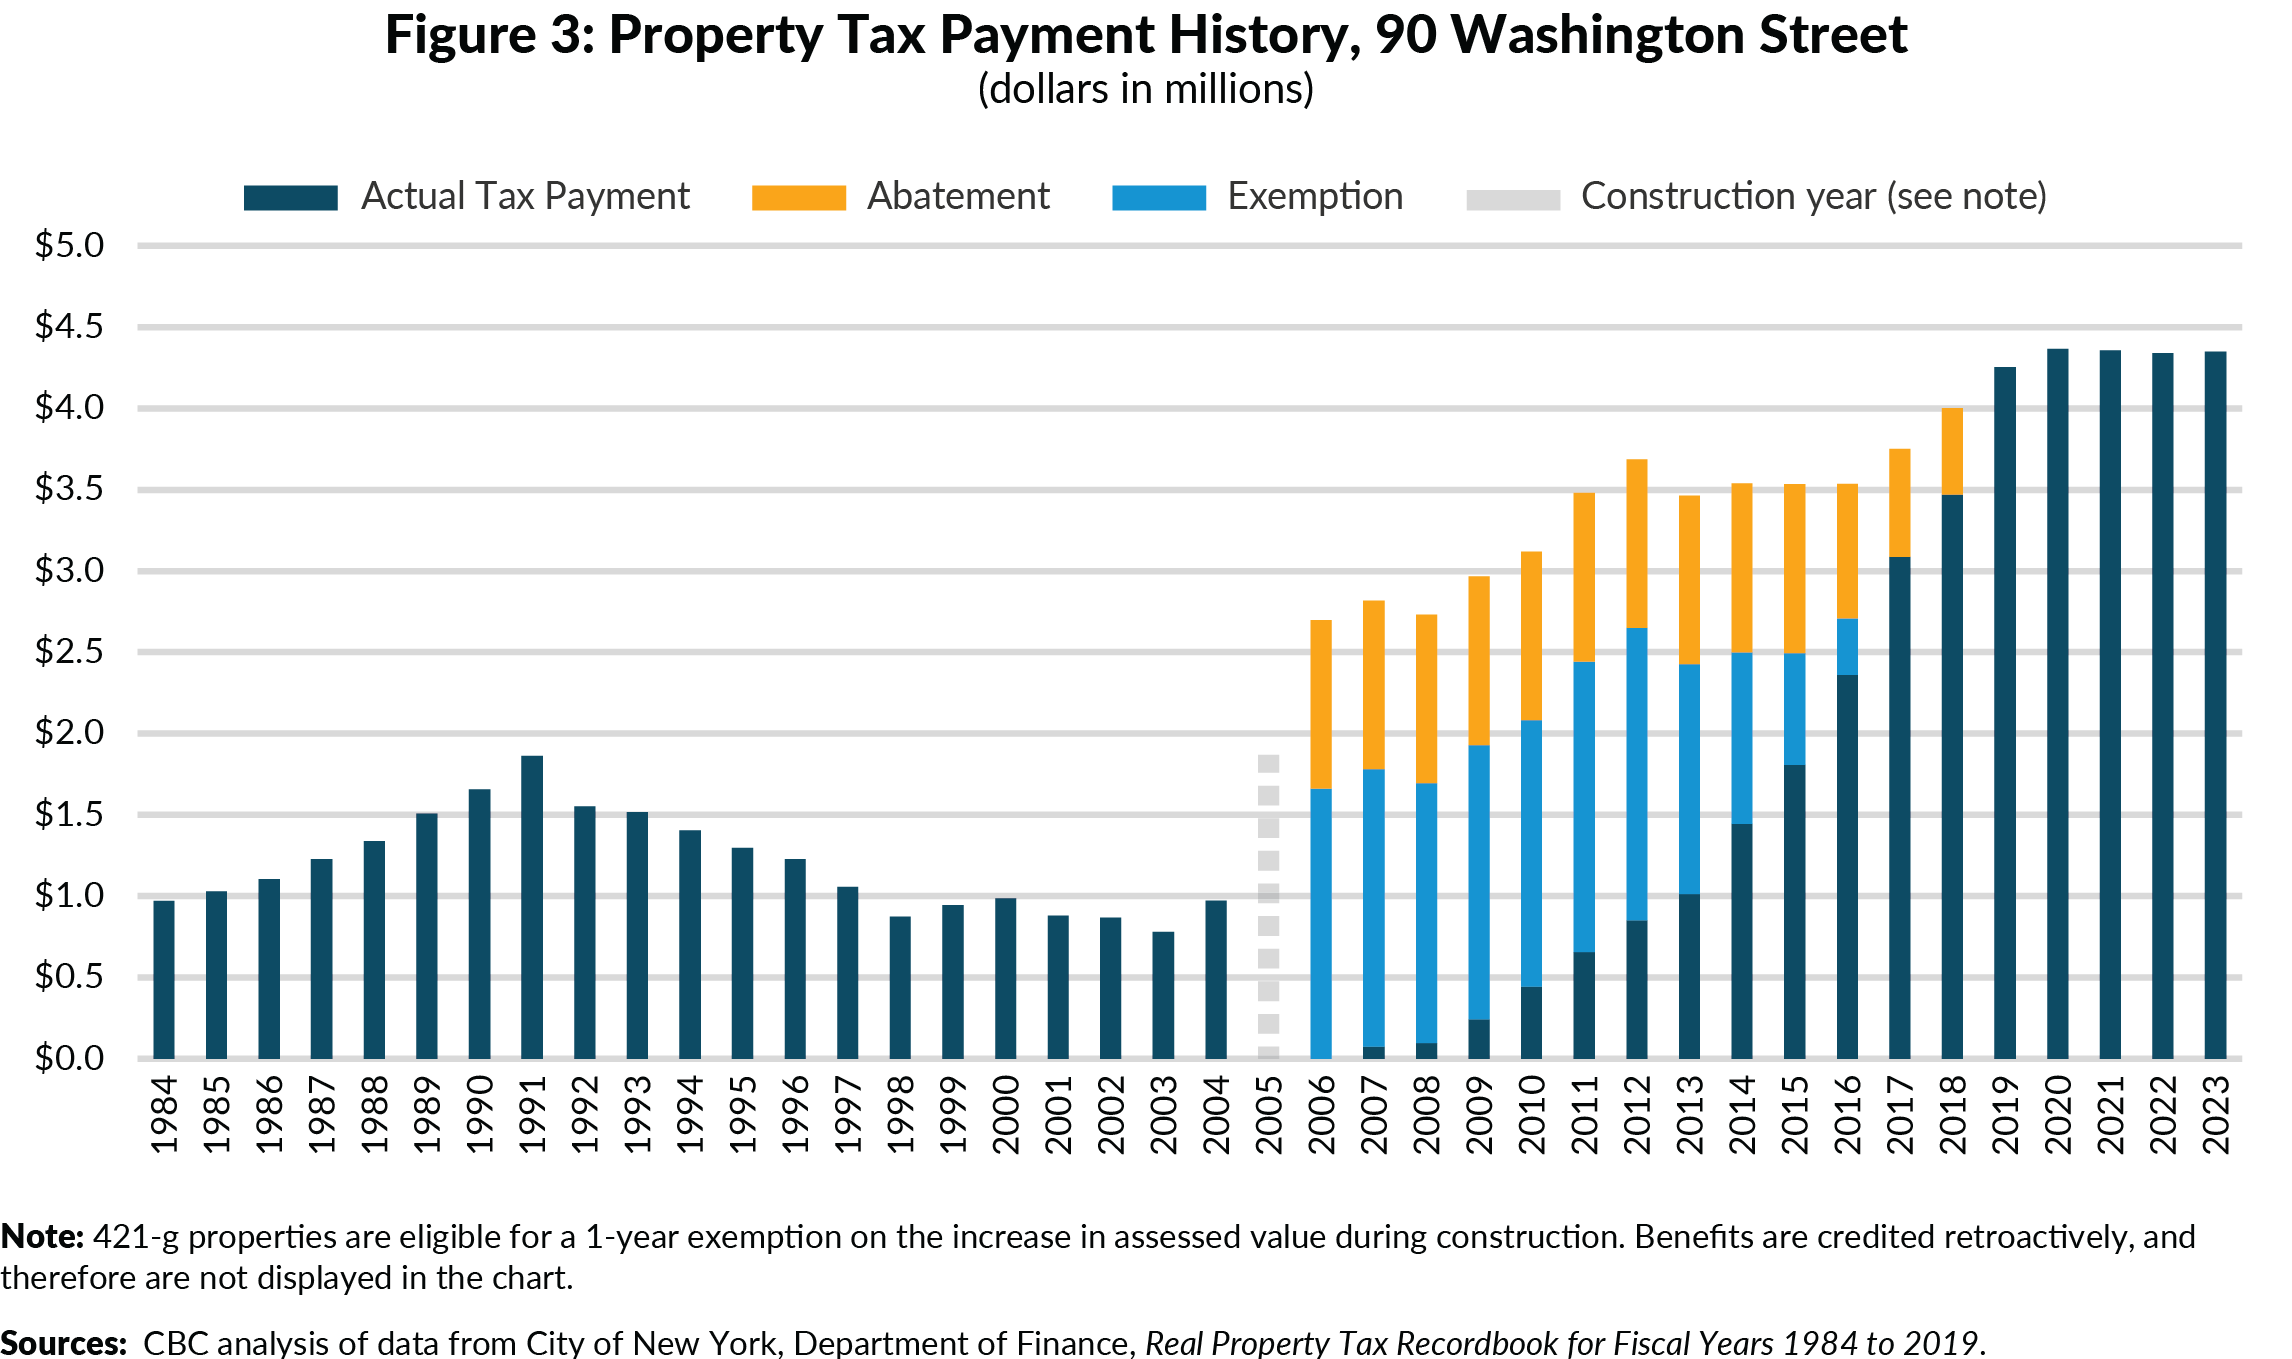 Figure 3. Property Tax Payment History, 90 Washington Street, dollars in millions